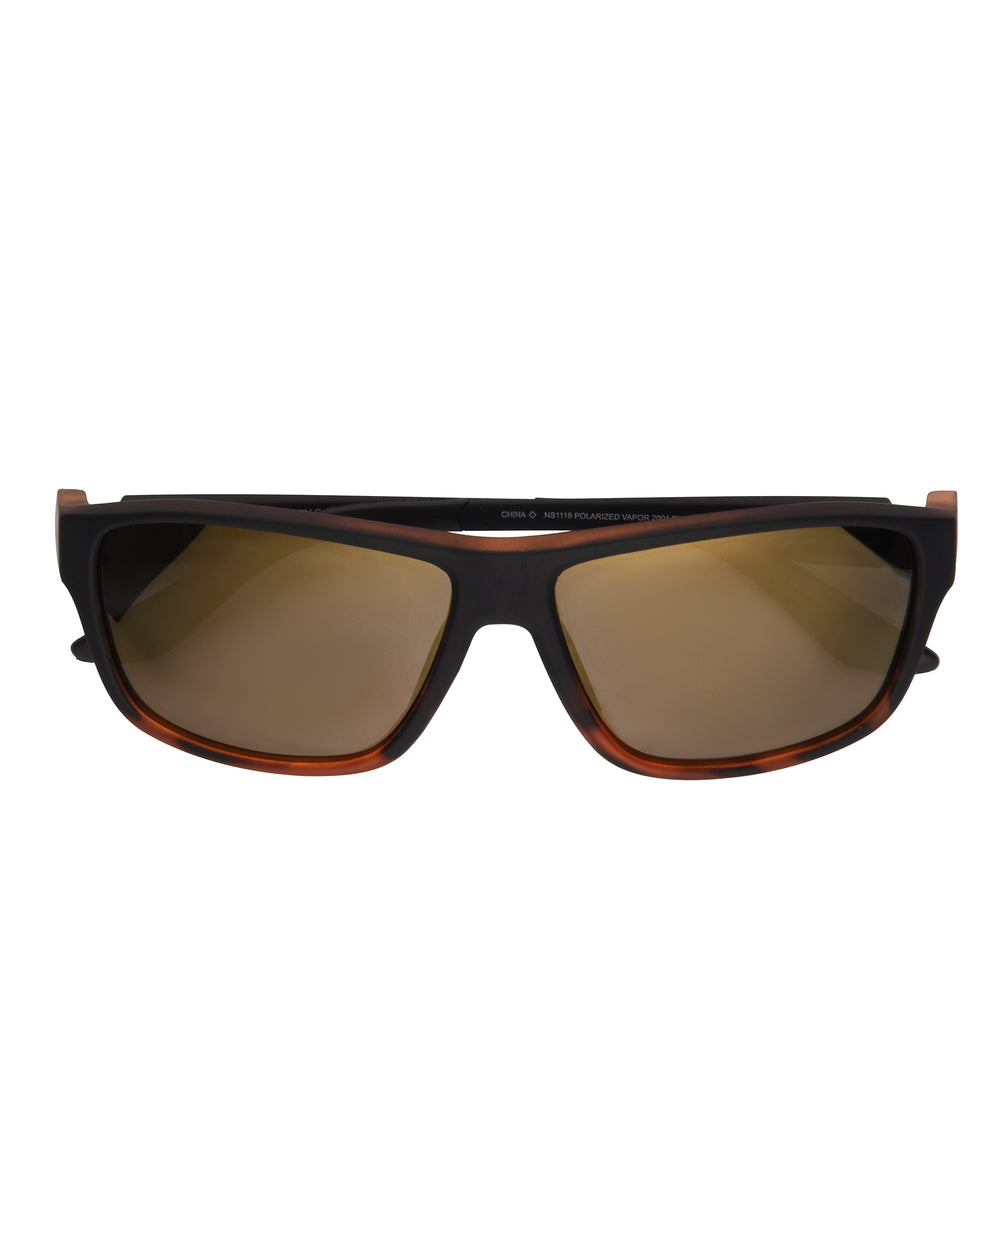  Body Glove Men's FL25 Sunglasses Polarized Wrap, Shiny